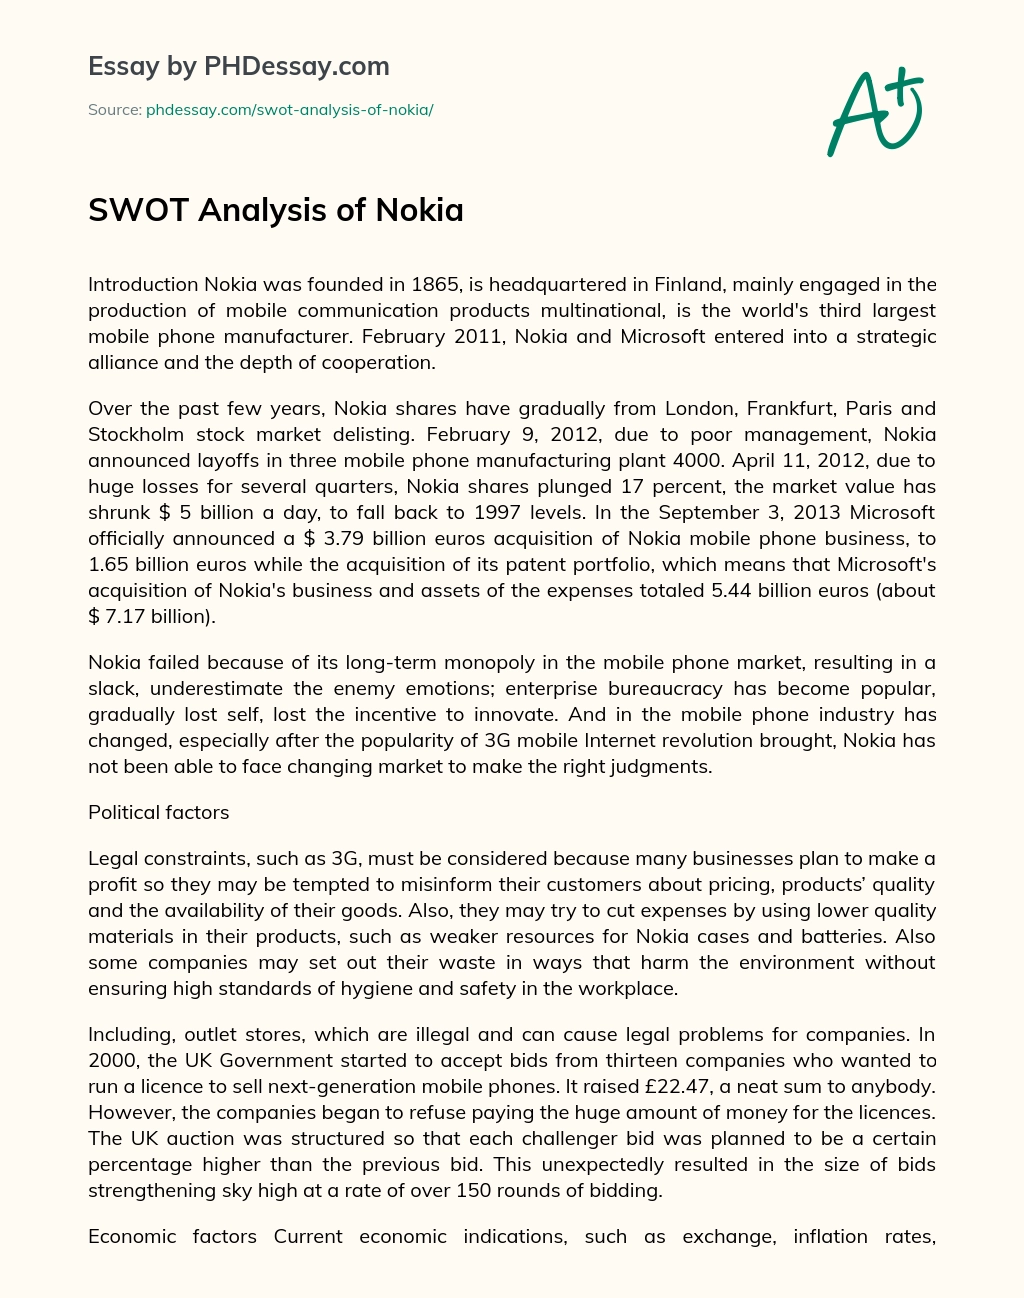 SWOT Analysis of Nokia essay